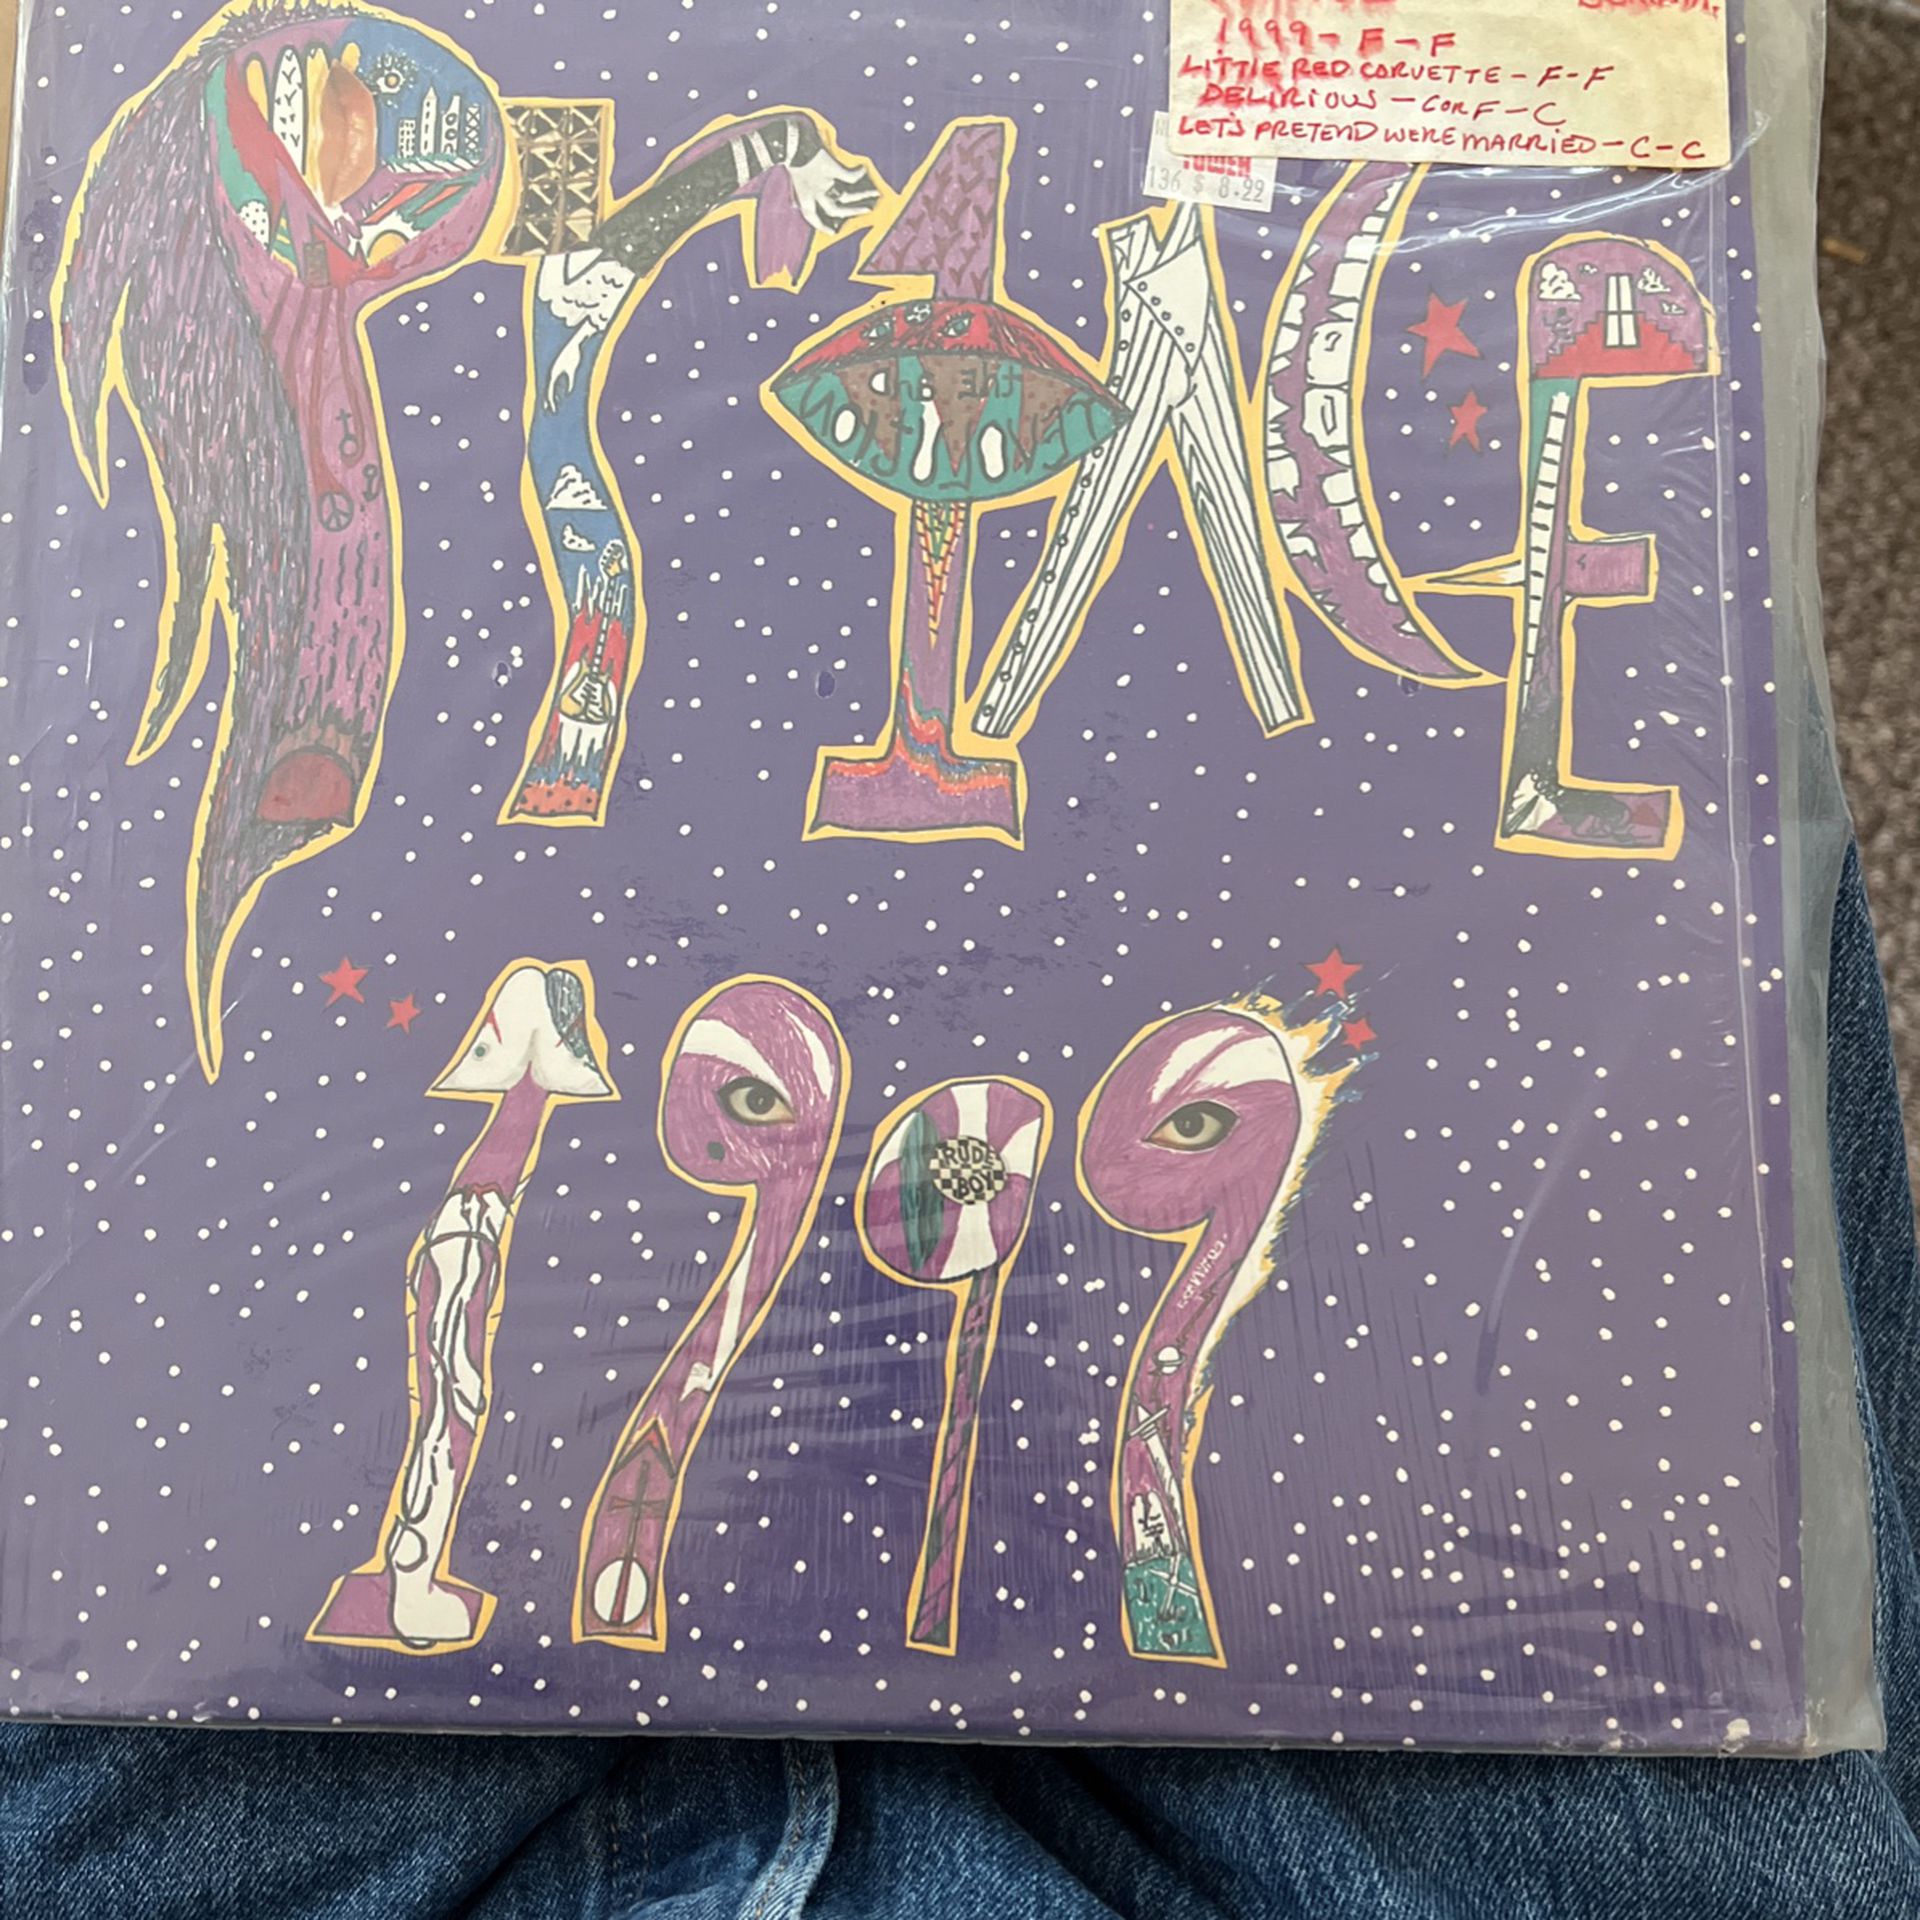 Prince 1999 Vinyl $50